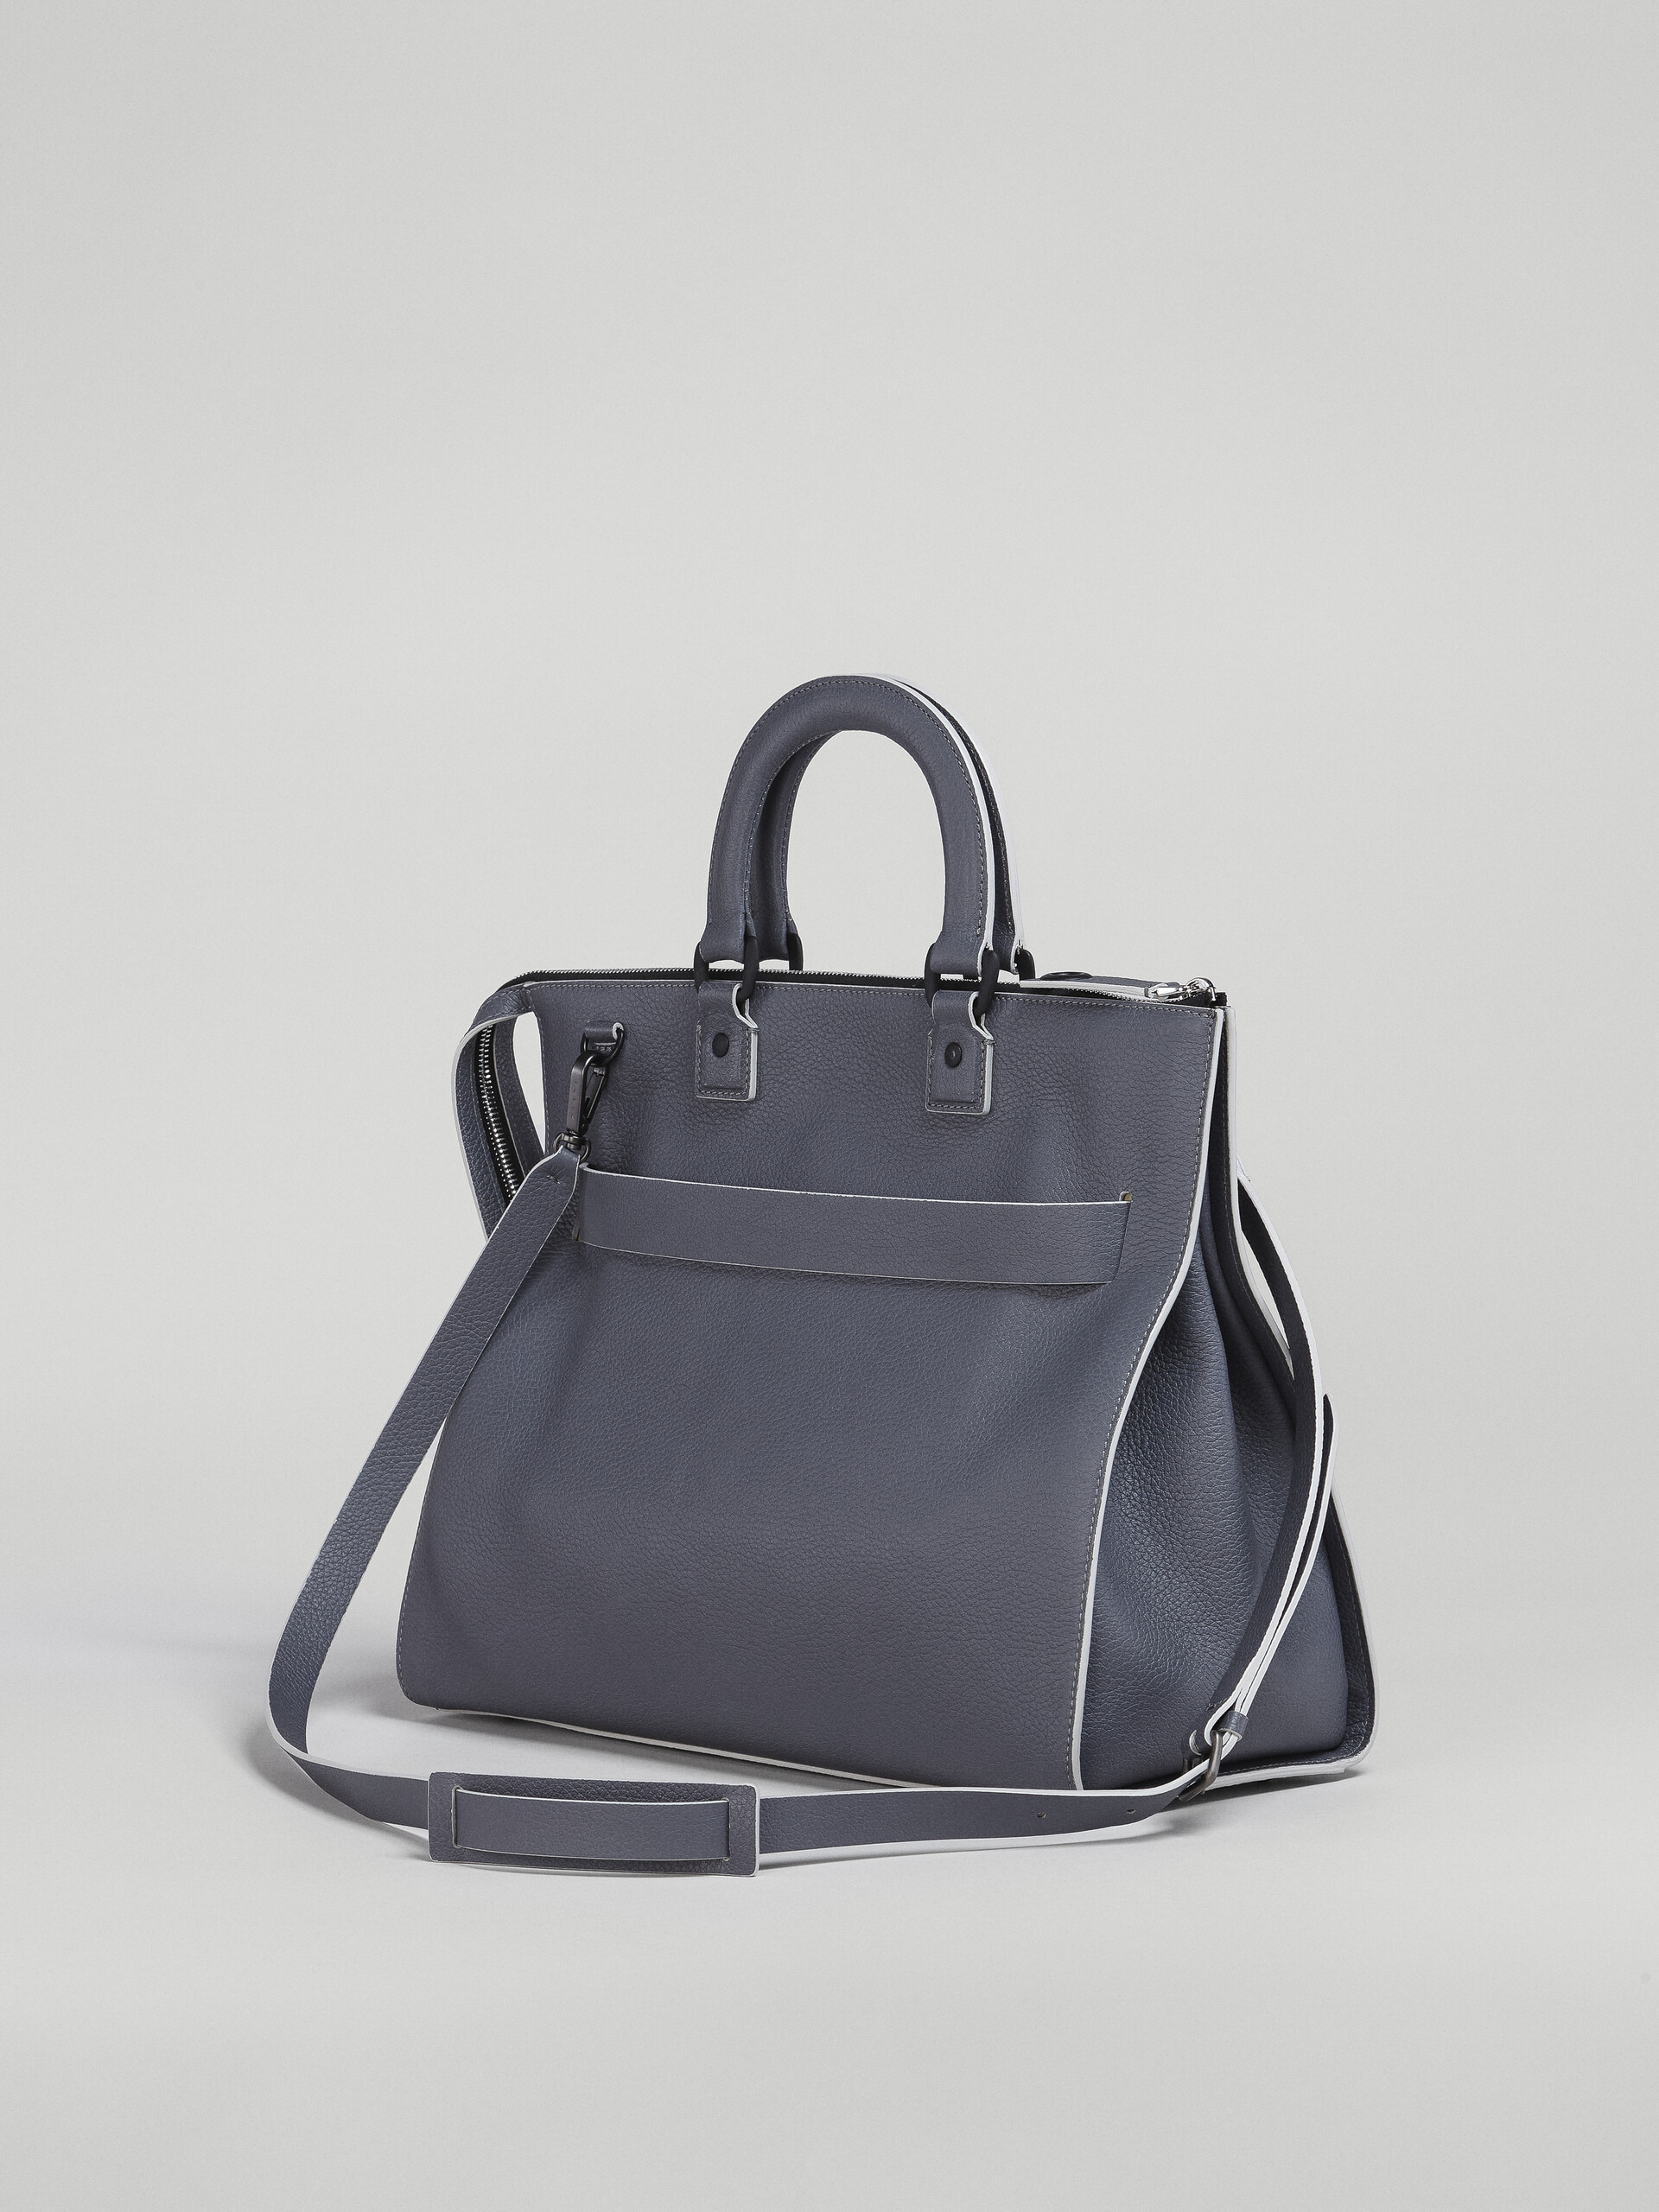 TREASURE bag in grey leather - Handbags - Image 3